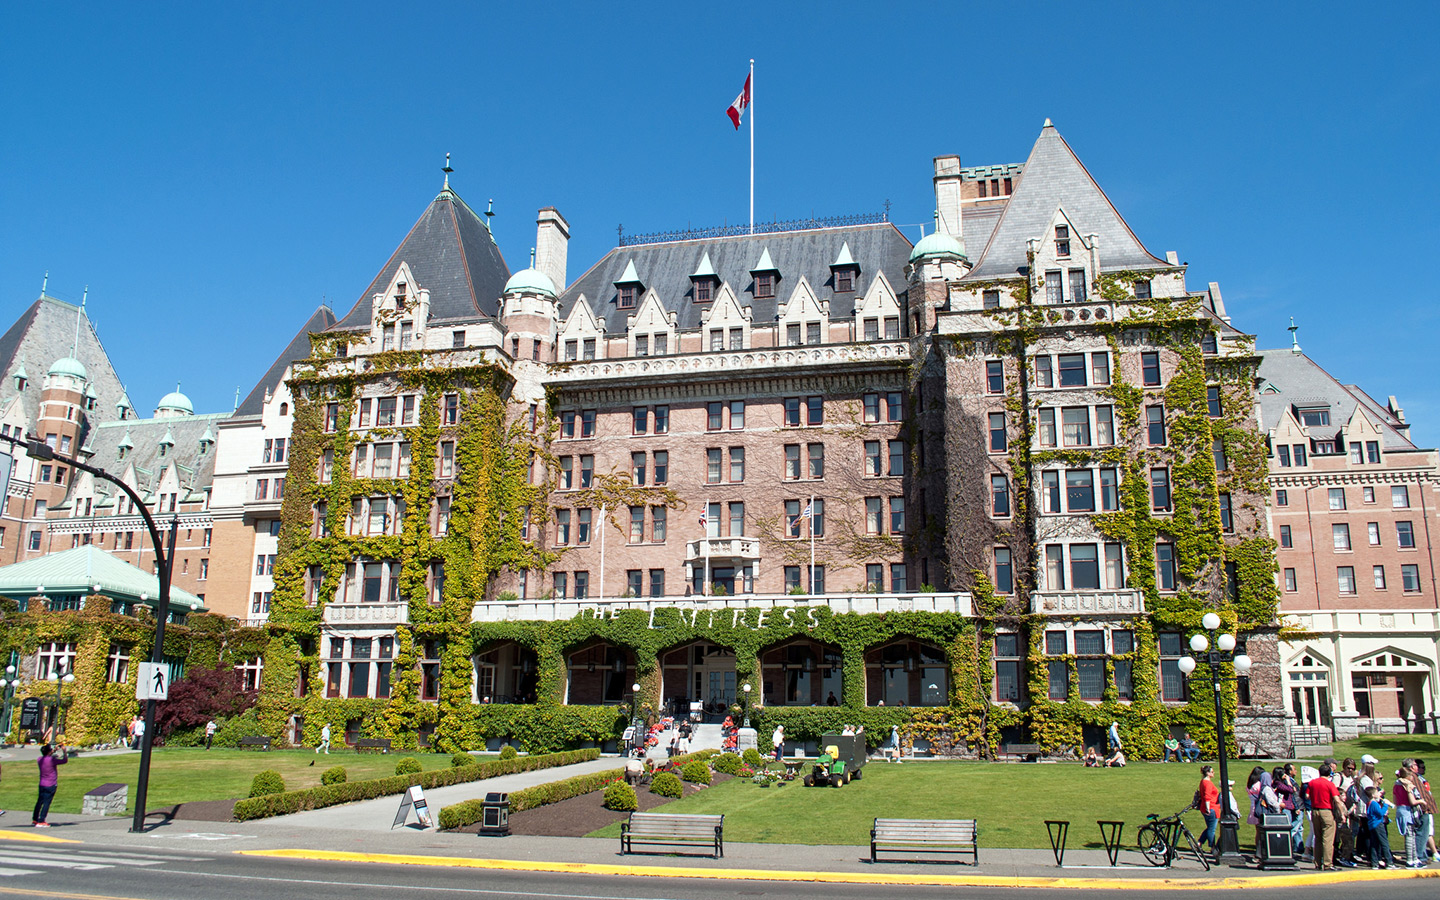 The Fairmont Empress hotel in Victoria, British Columbia